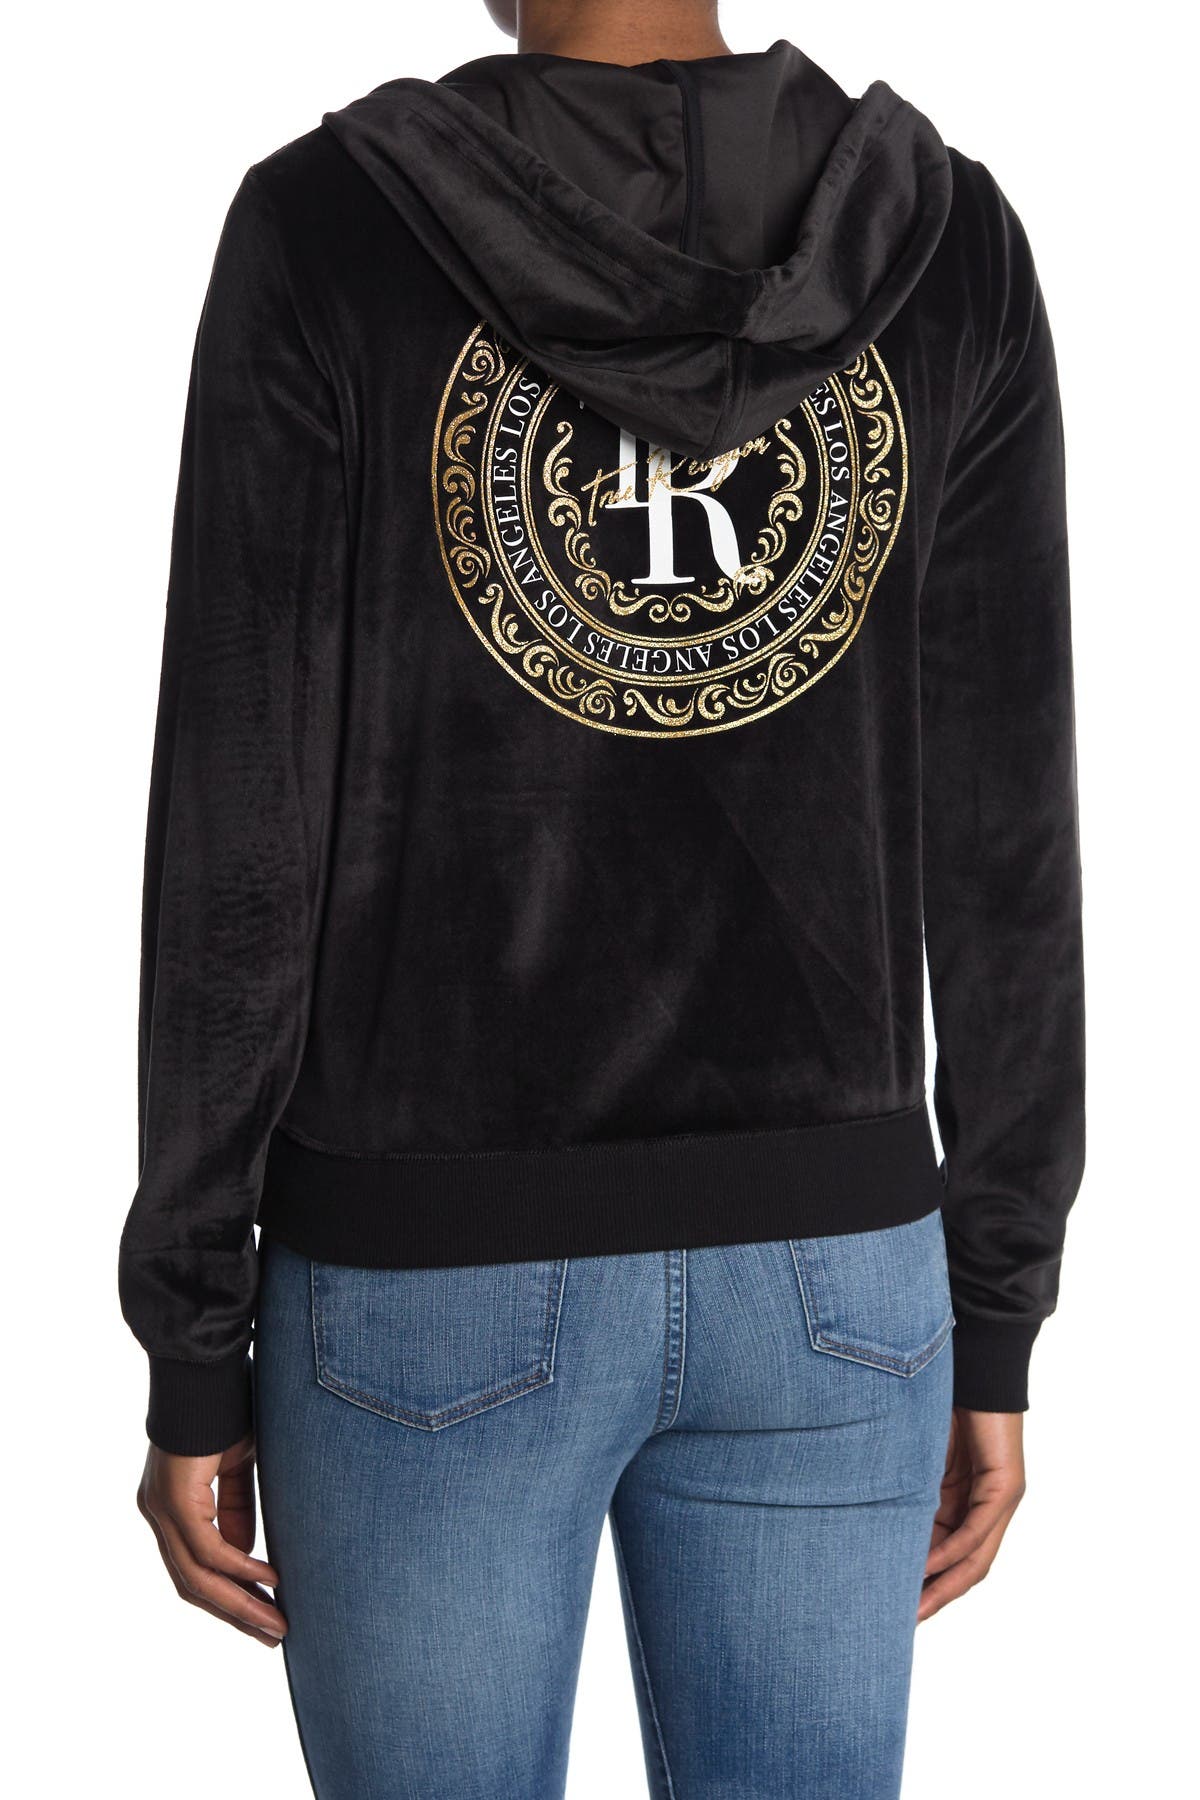 true religion velour hoodie